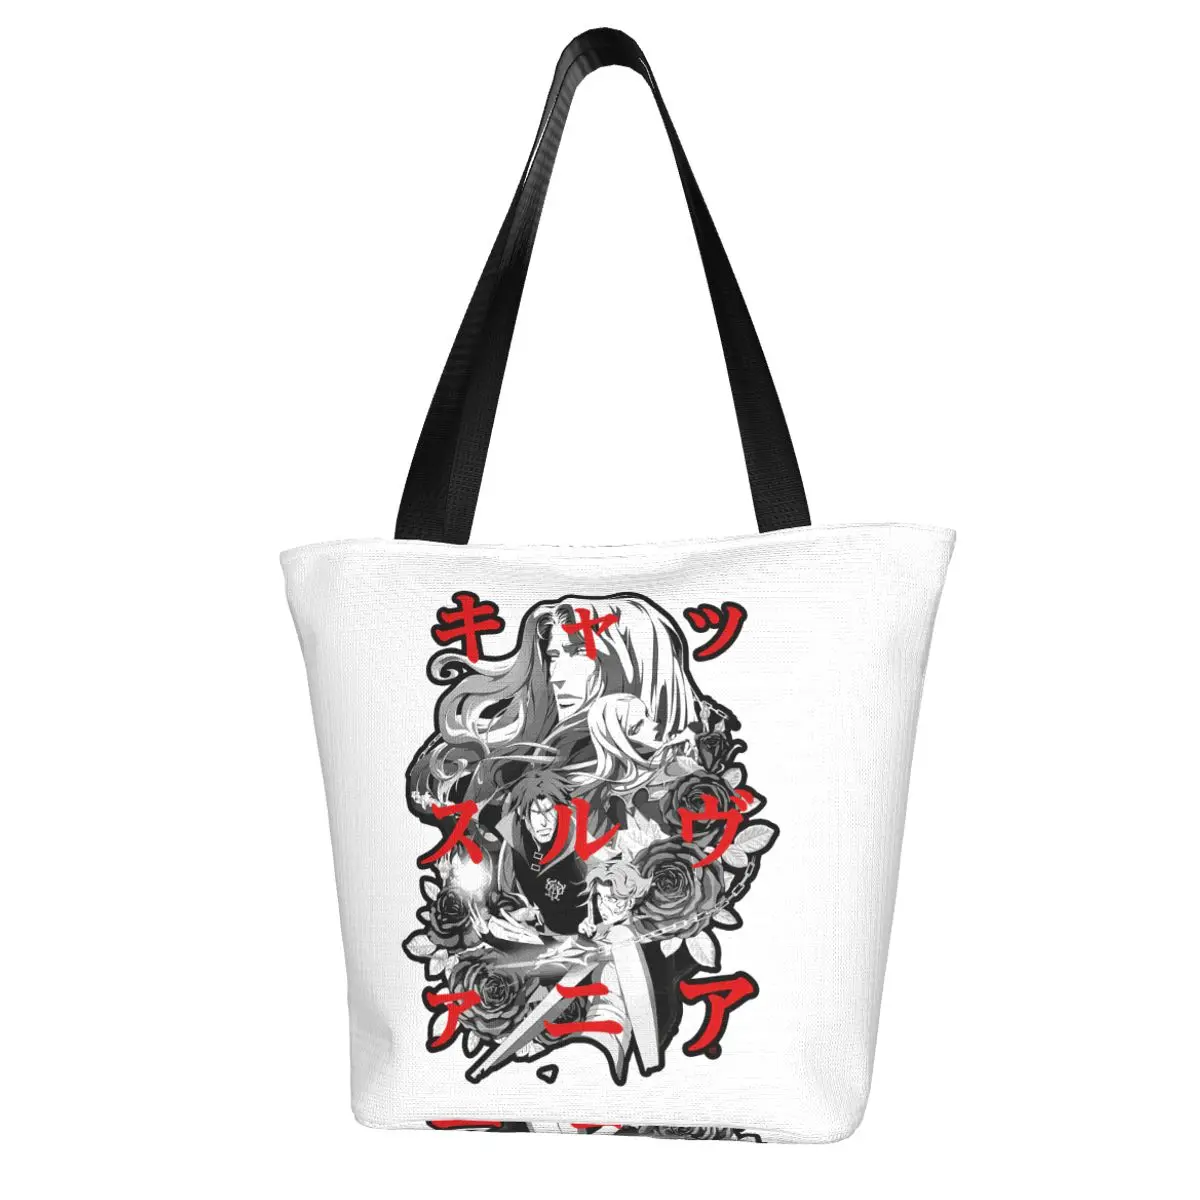 Castlevania Group Shot Kanji Overlay Shopping Bag Aesthetic Cloth Outdoor Handbag Female Fashion Bags